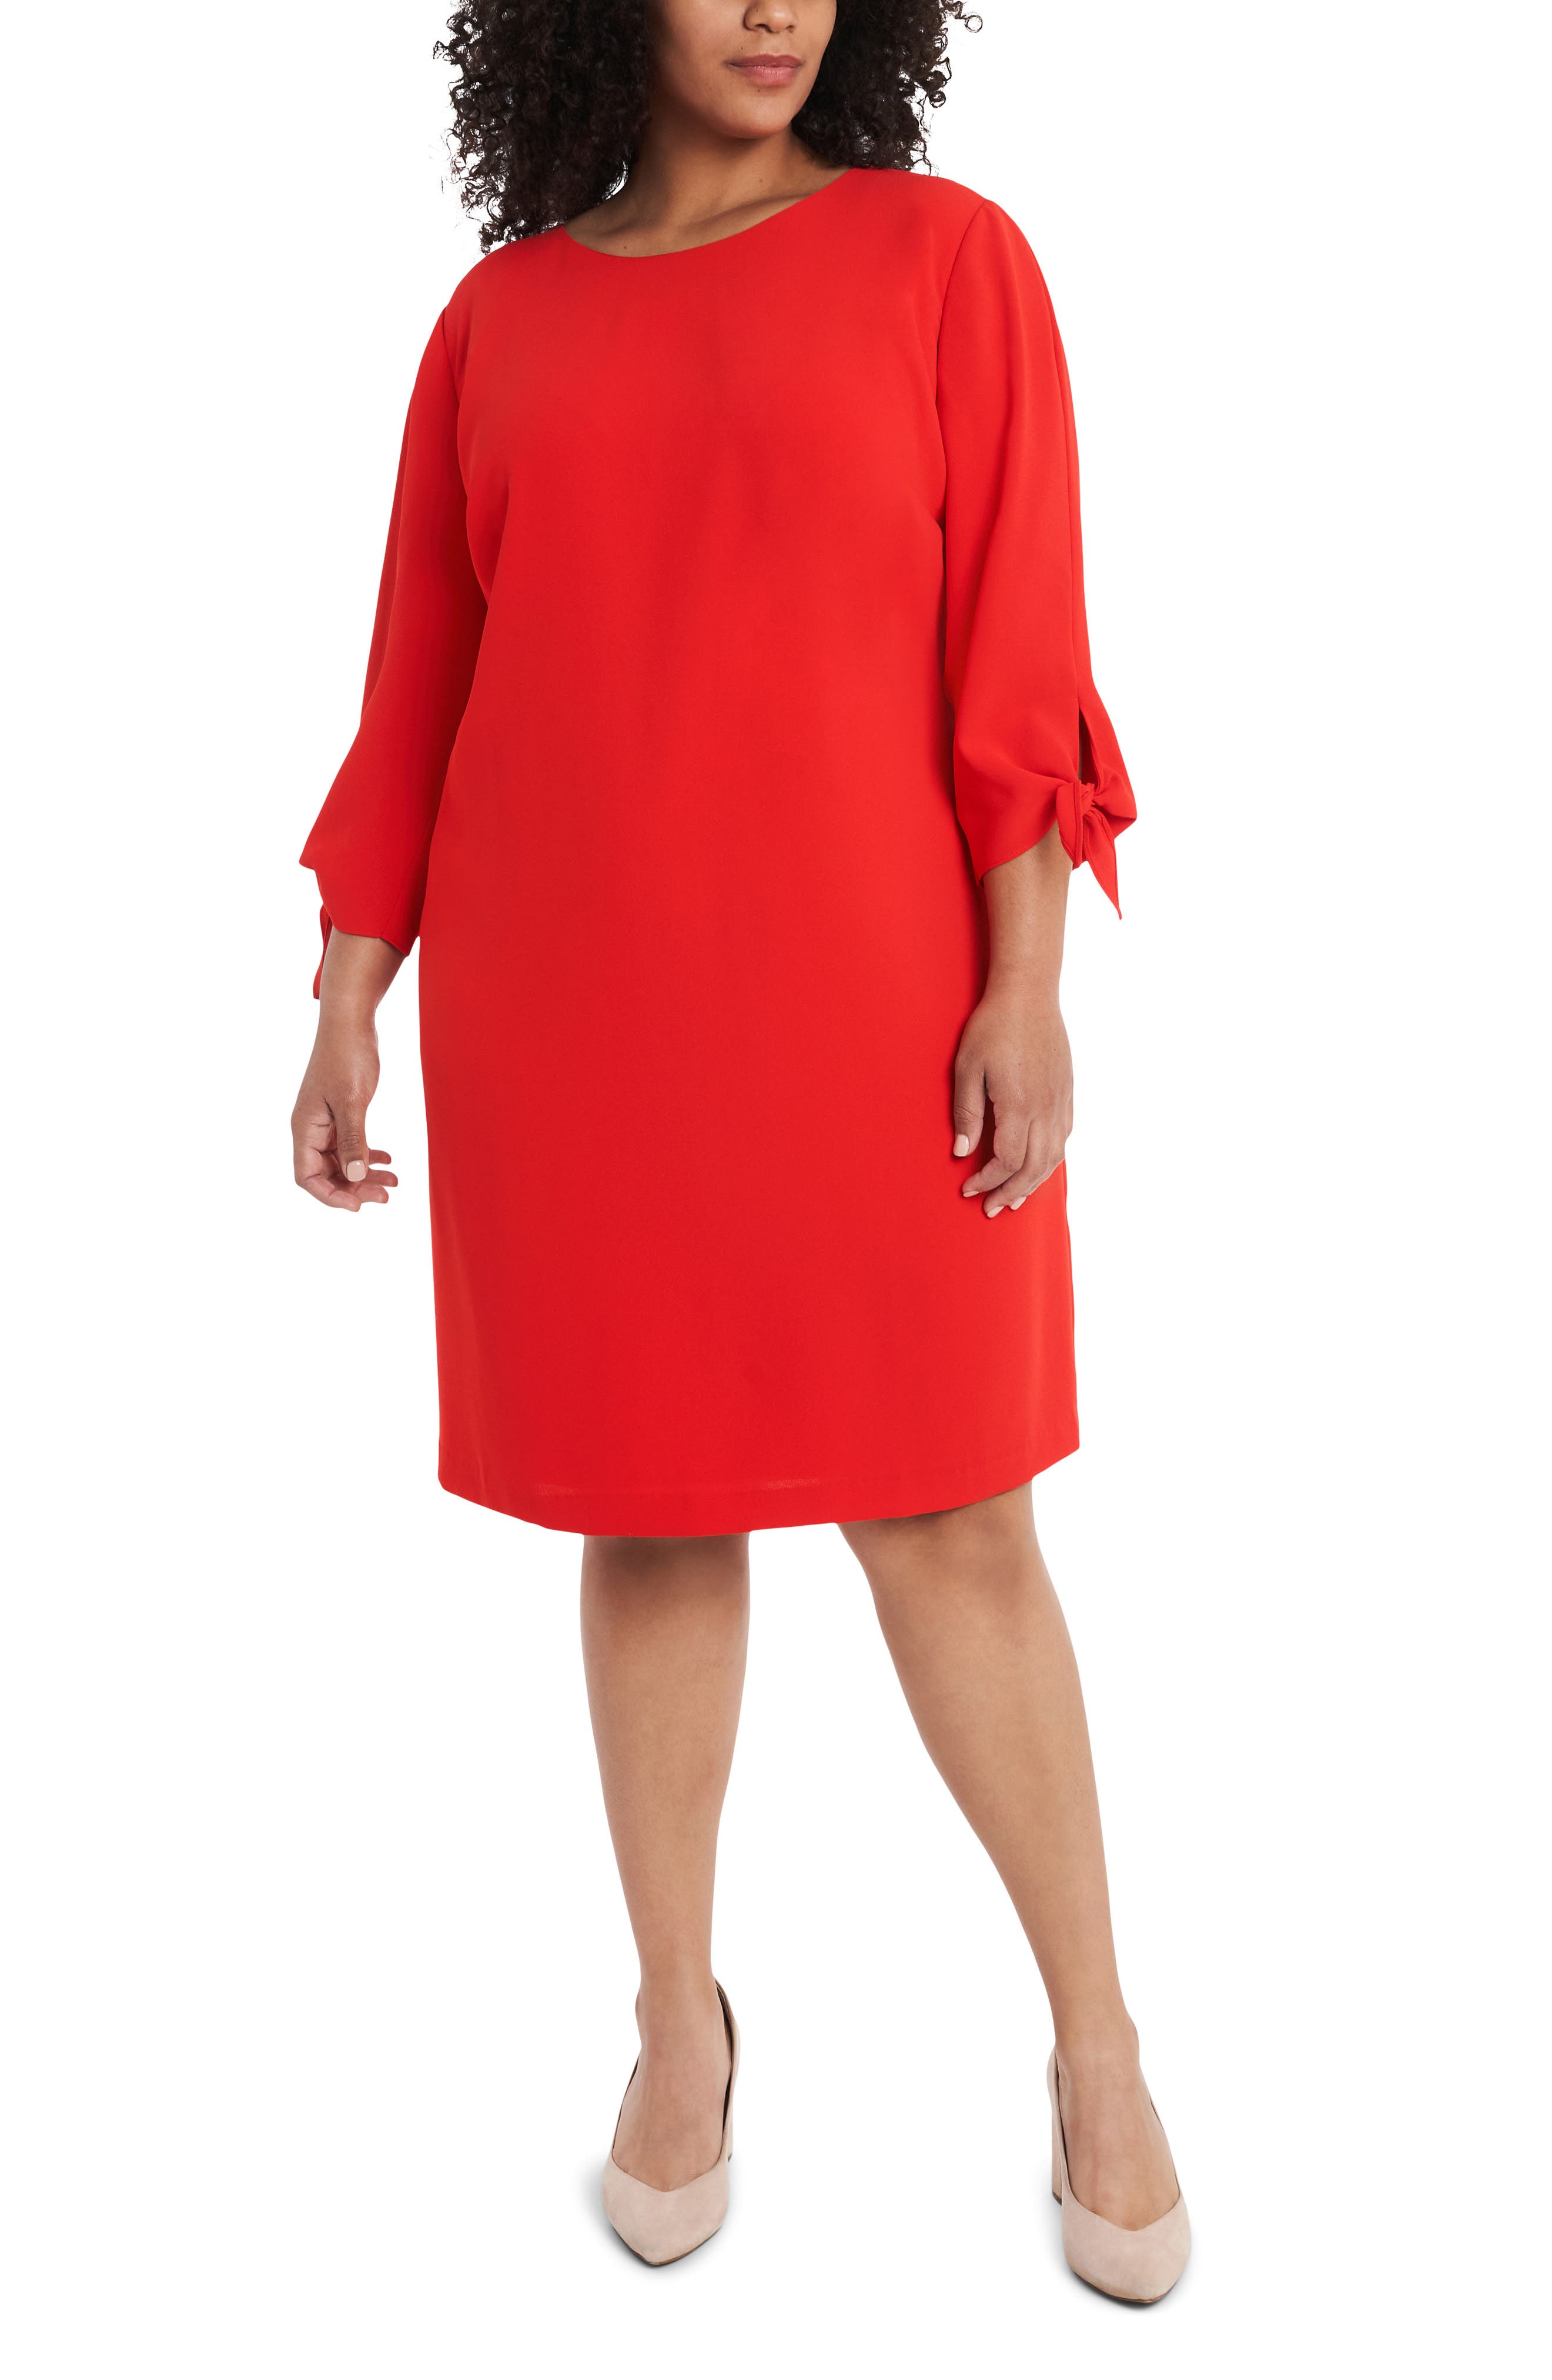 Short Red Dress Plus Size